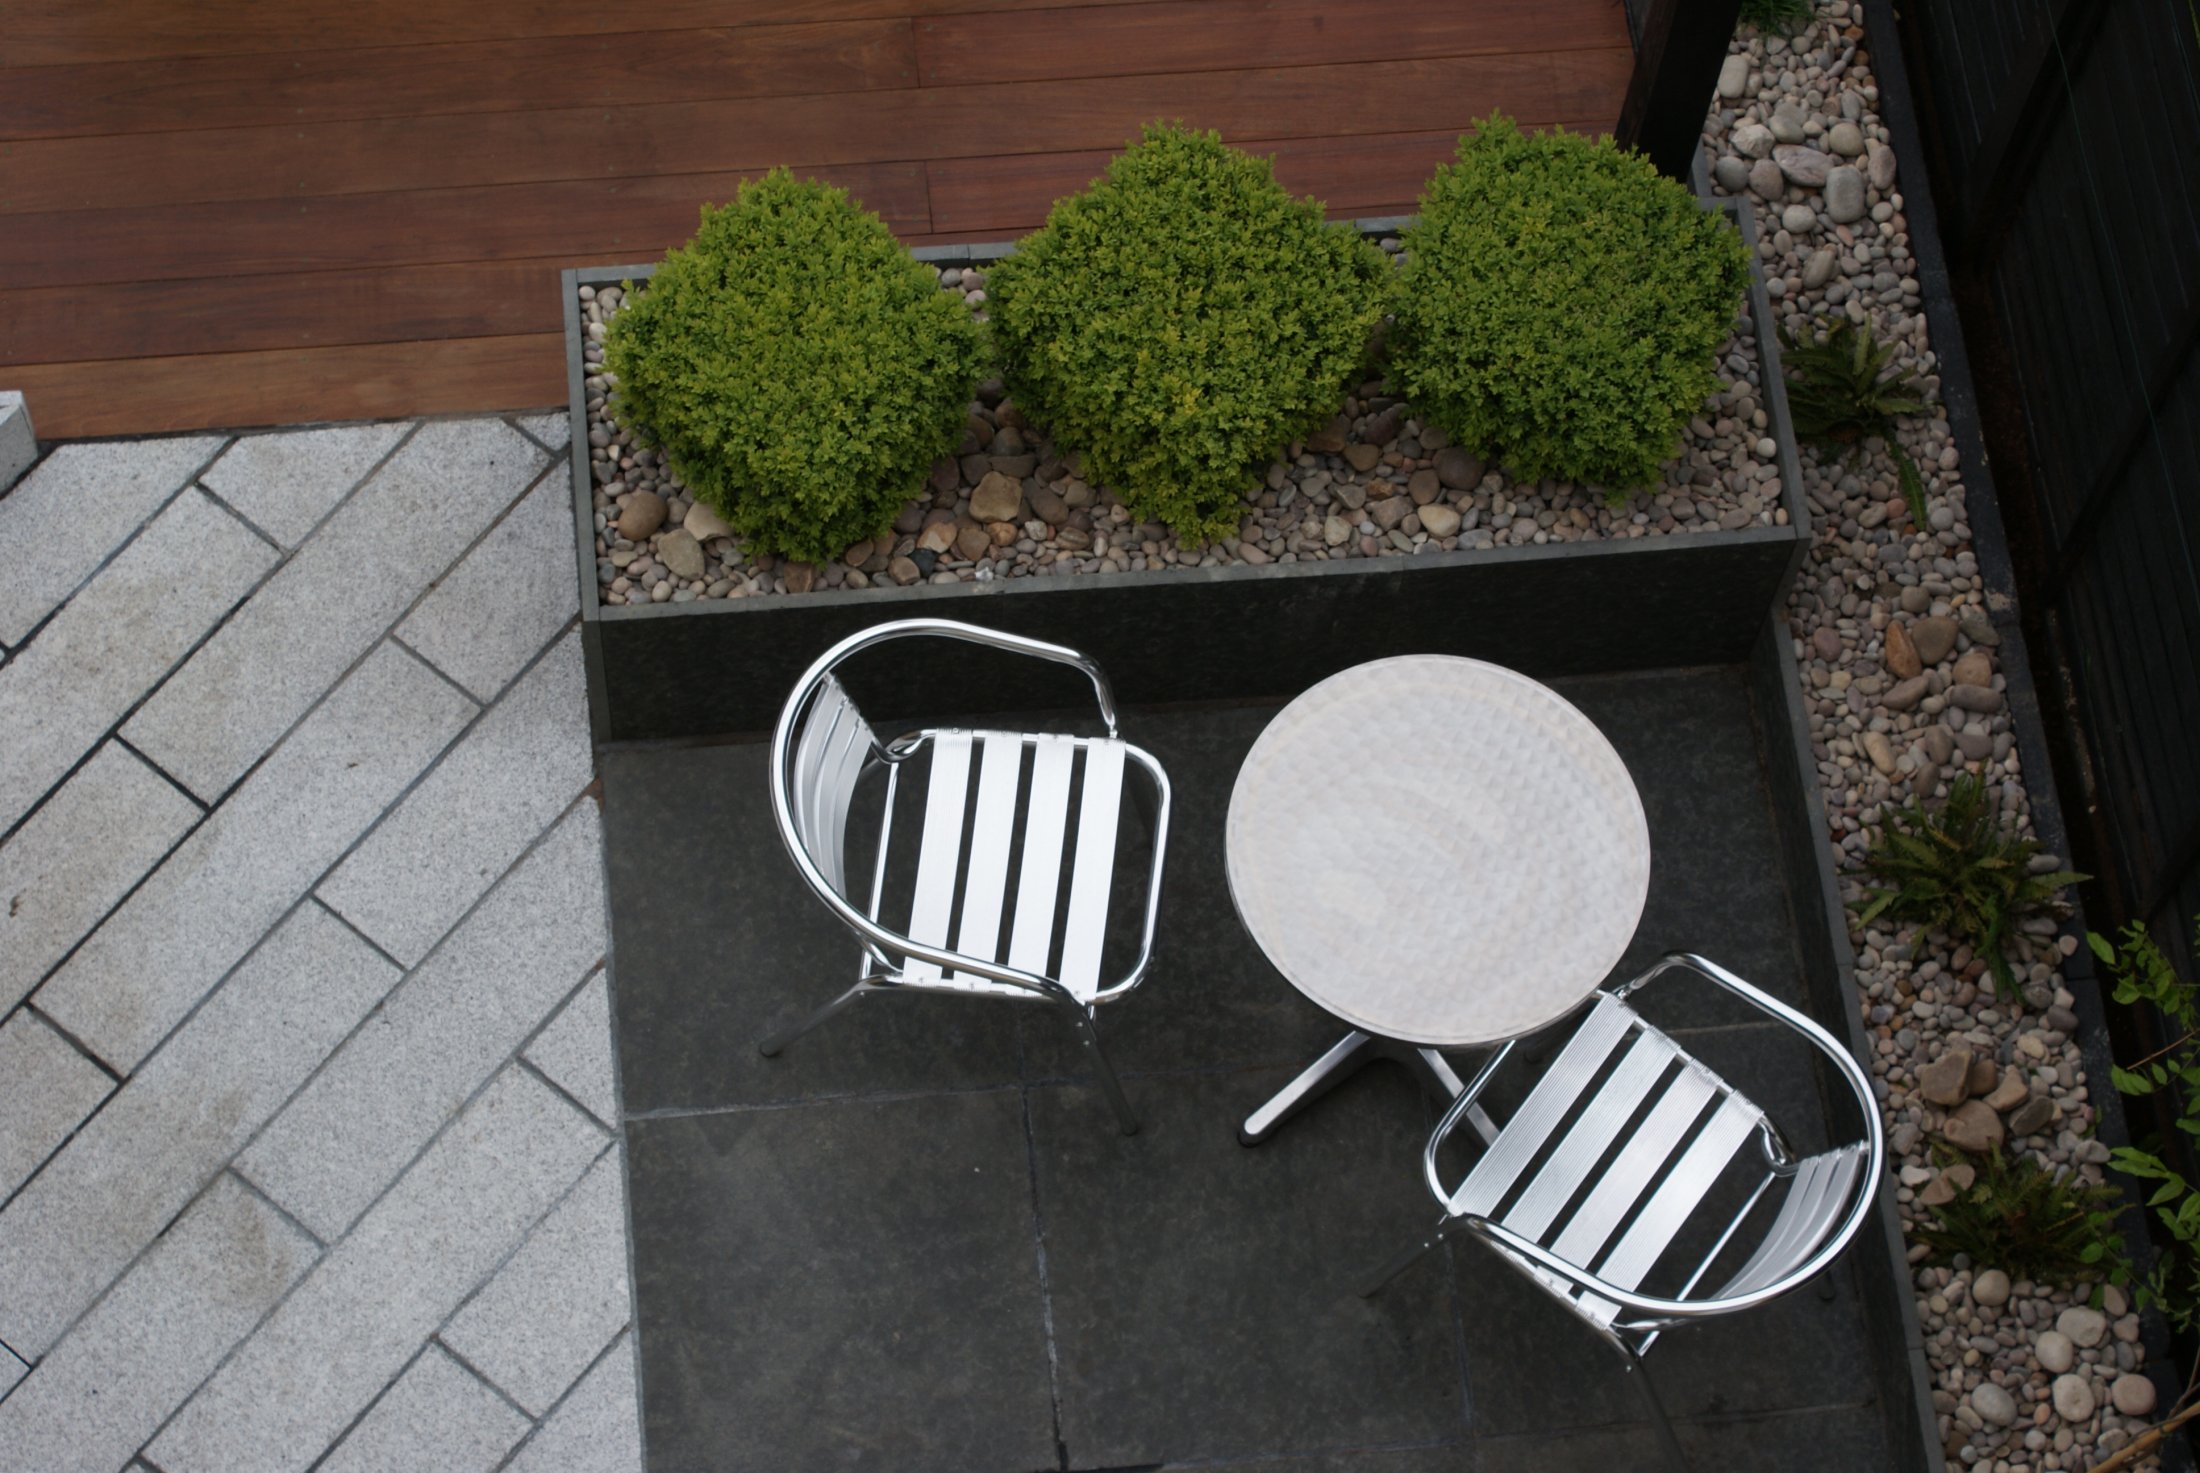 Contemporary garden design in hardwood and granite